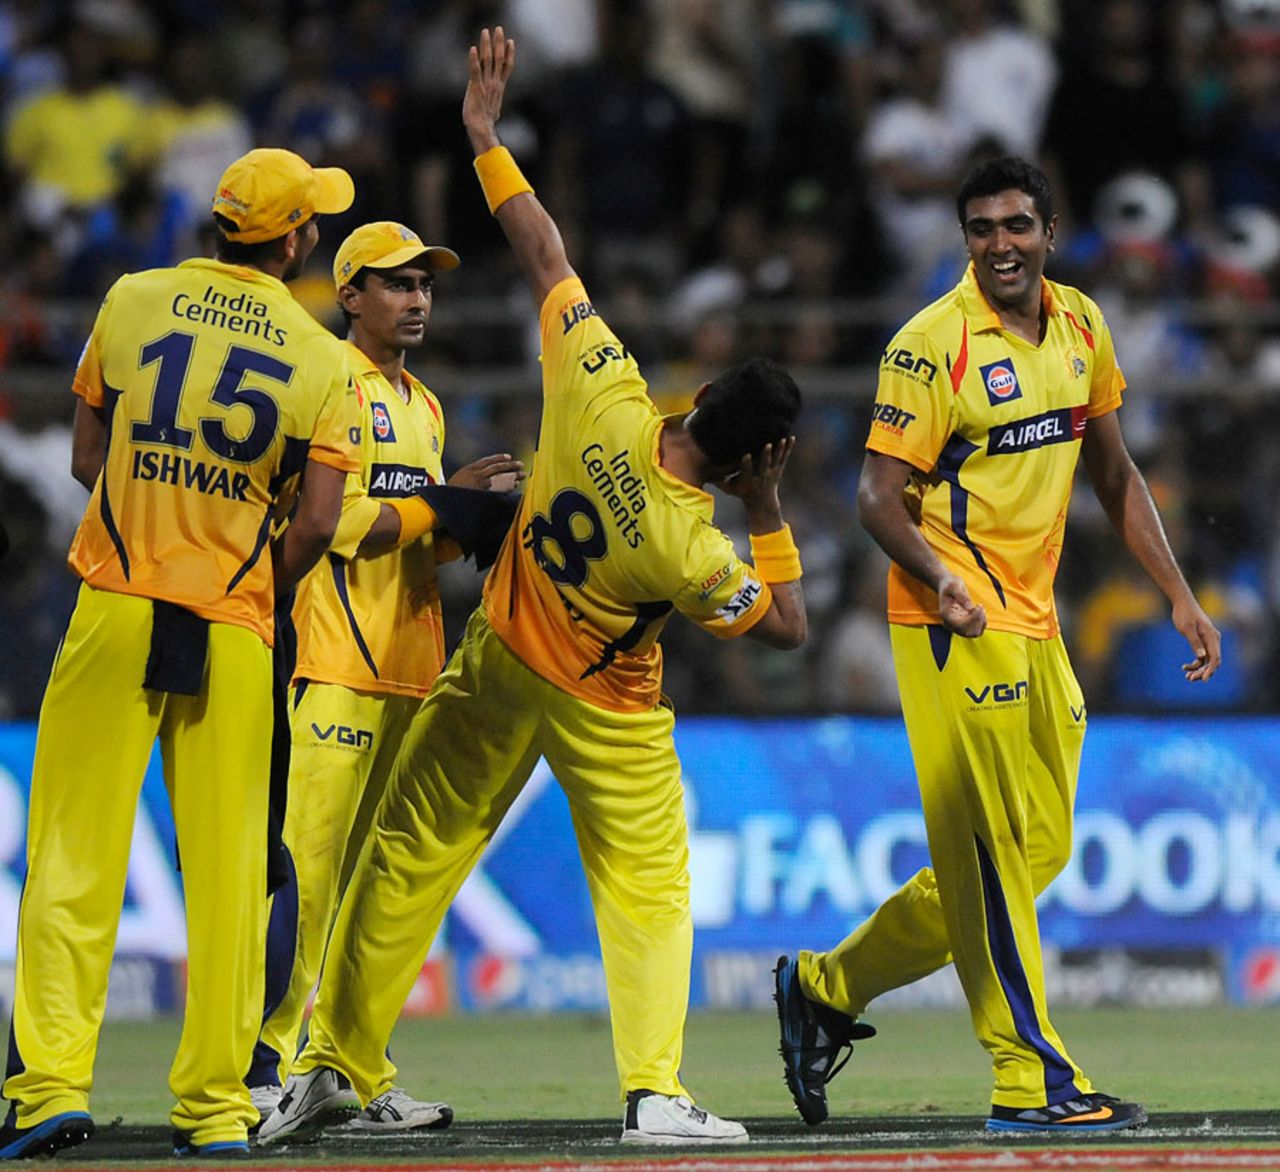 R Ashwin picked up three wickets, Mumbai Indians v Chennai Super Kings, IPL 2014, Mumbai, May 10, 2014